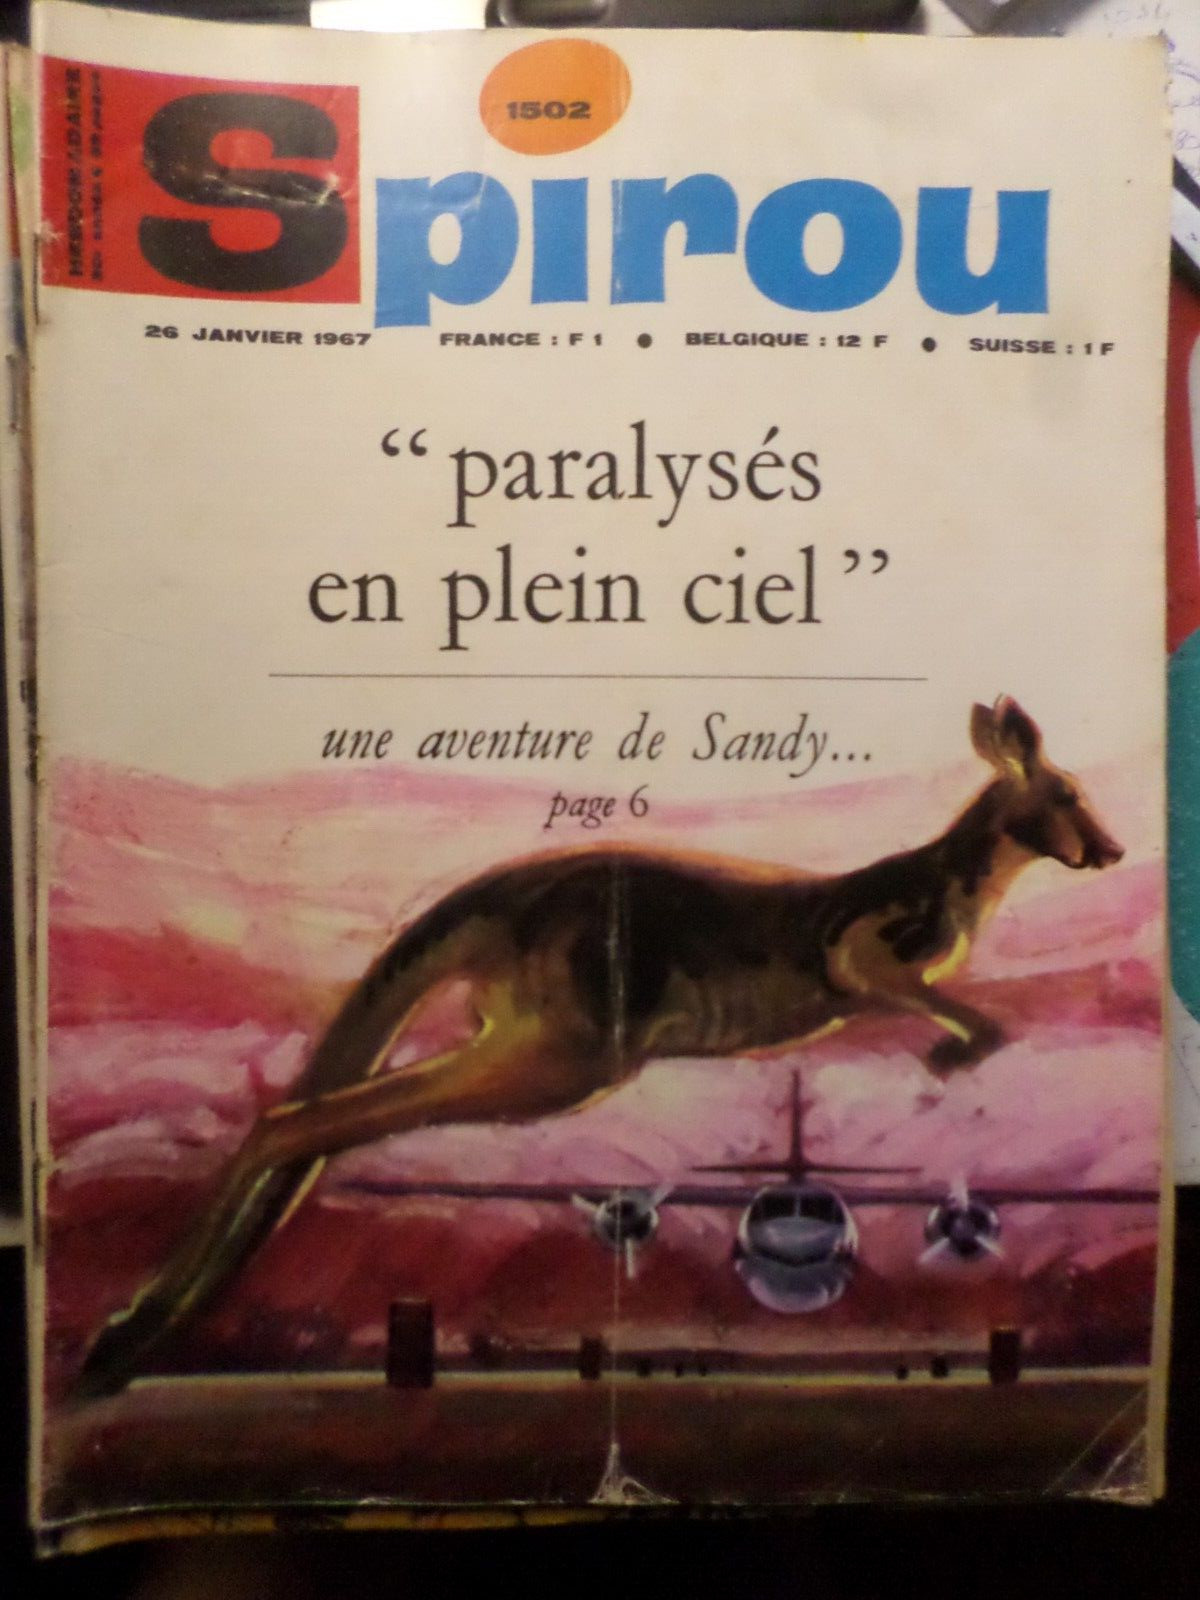 Journal Spirou 1502 Weekly 1967, Comics, Electric Car, Mini Book